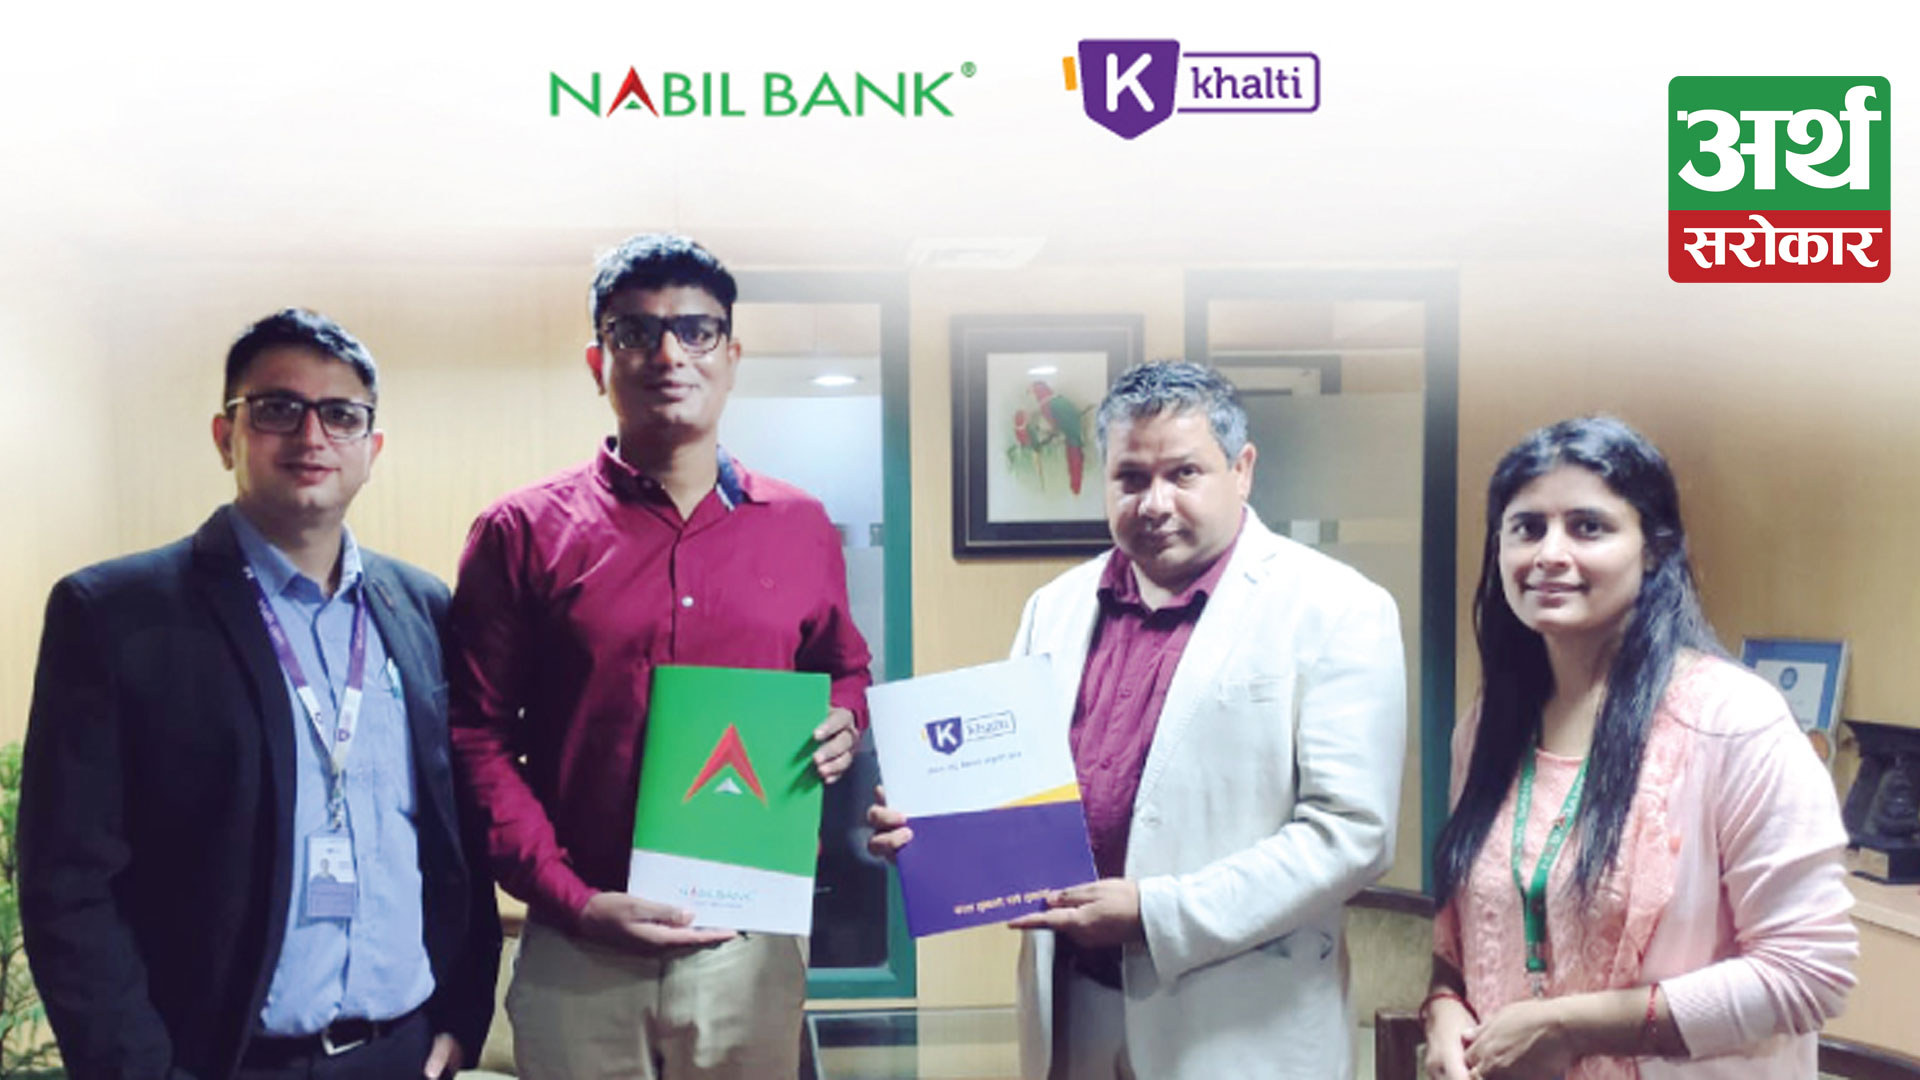 Nabil Bank customers can now load funds on Khalti using Nabil SmartBank App